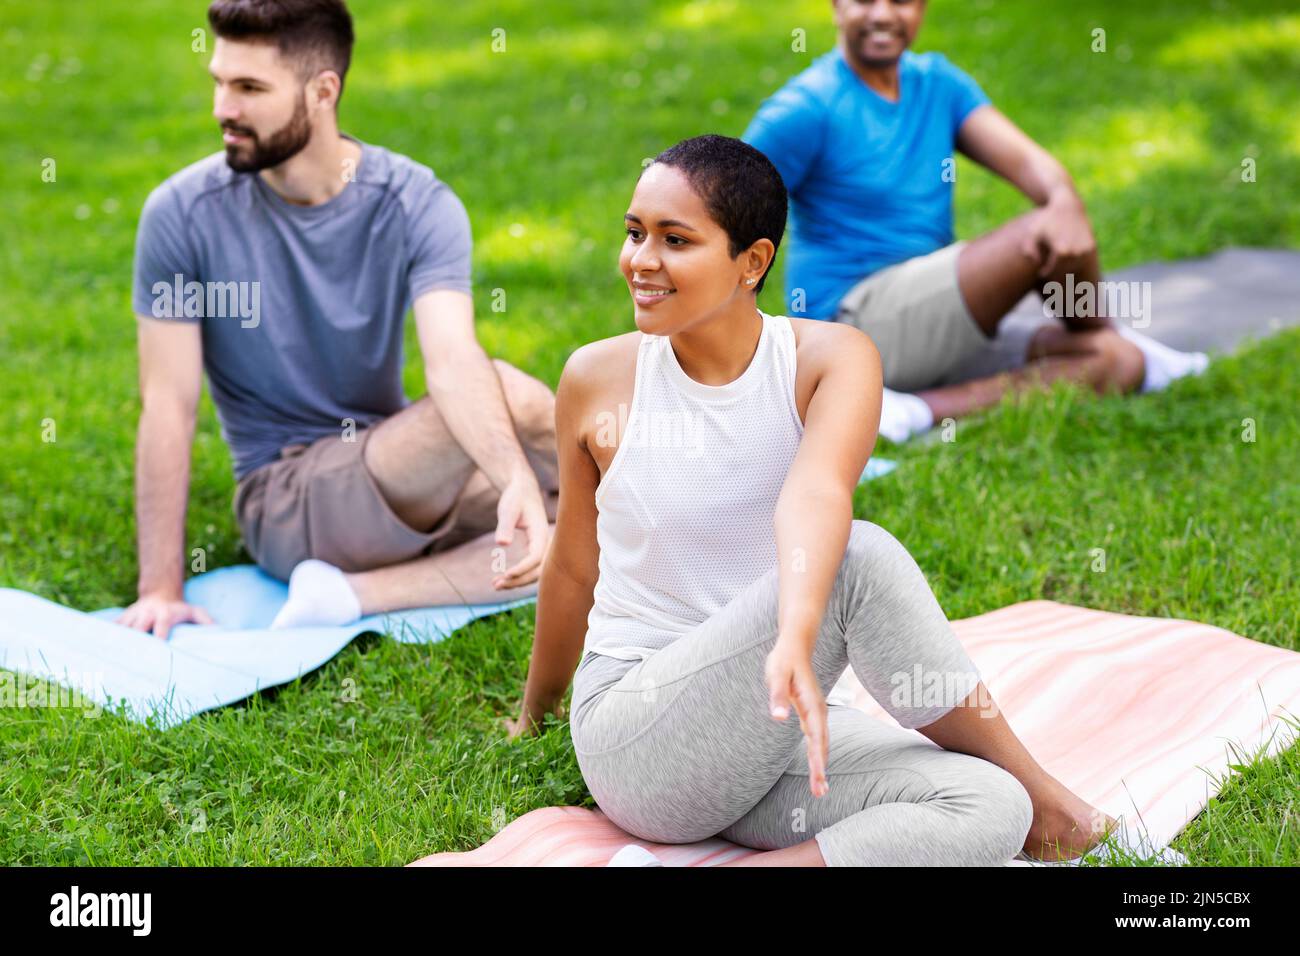 https://c8.alamy.com/comp/2JN5CBX/group-of-people-doing-yoga-at-summer-park-2JN5CBX.jpg